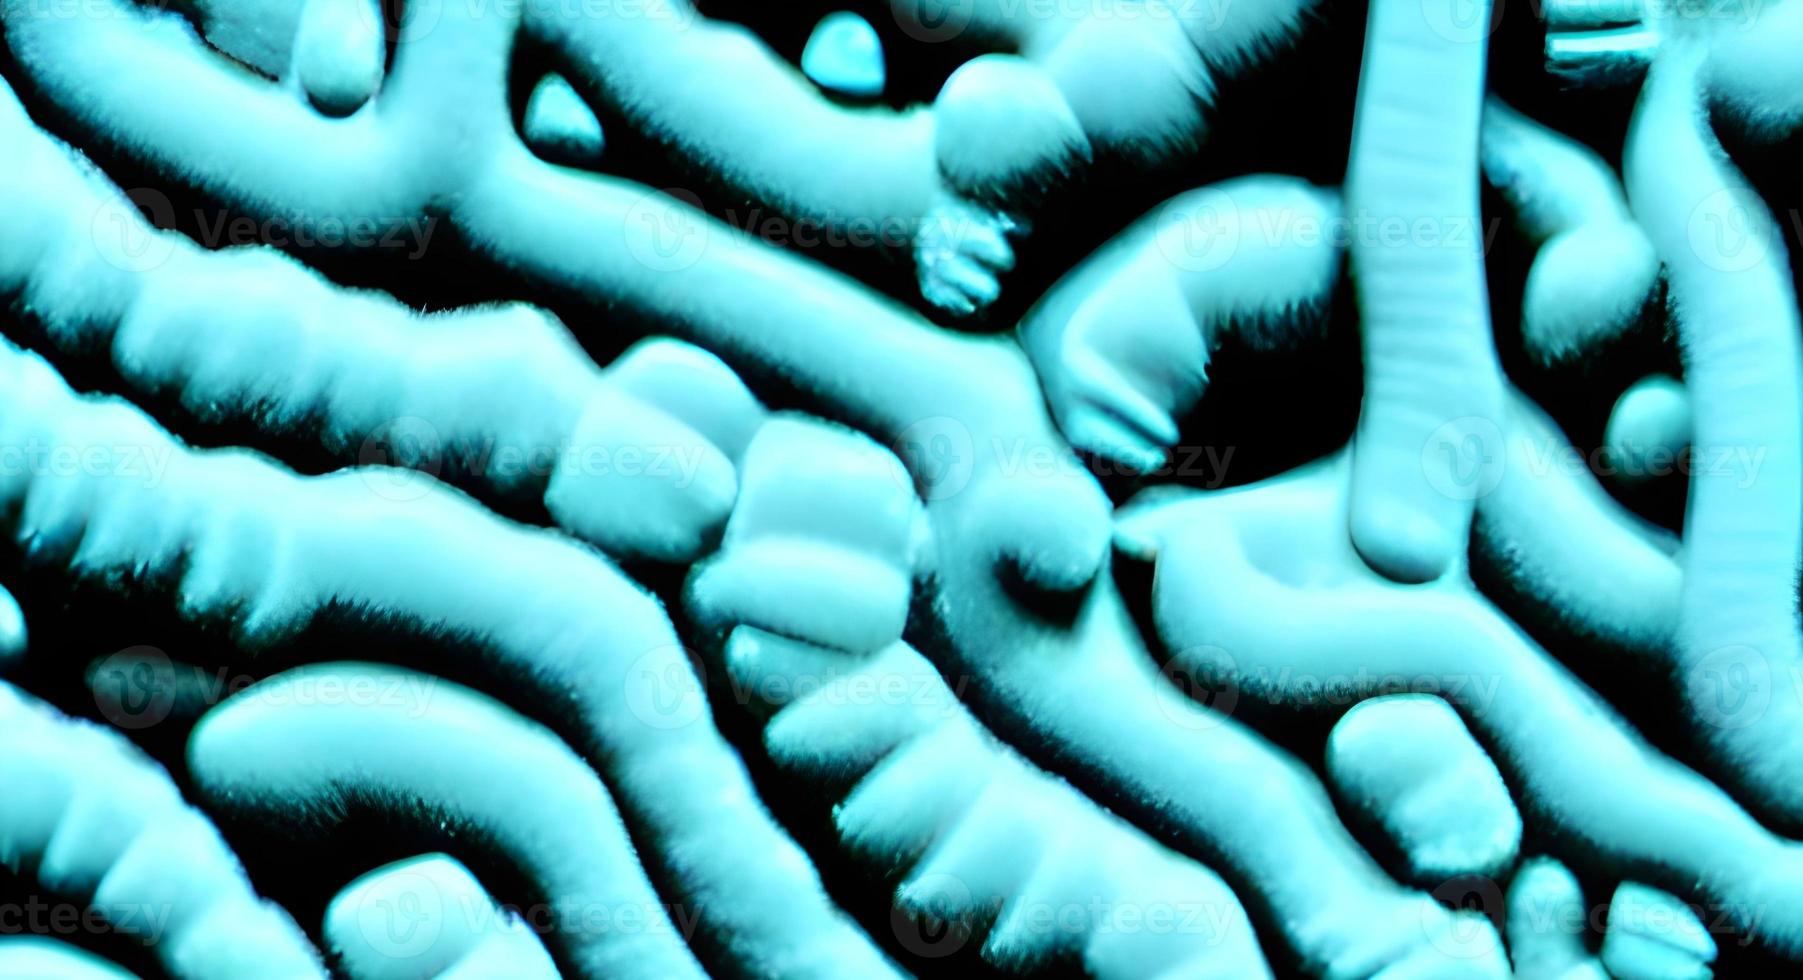 bactérias e vírus na superfície da pele, membrana mucosa ou intestino, modelo de mers, hiv, gripe, escherichia coli, salmonela, klebsiella, legionella, mycobacterium tuberculosis, modelo de micróbios foto